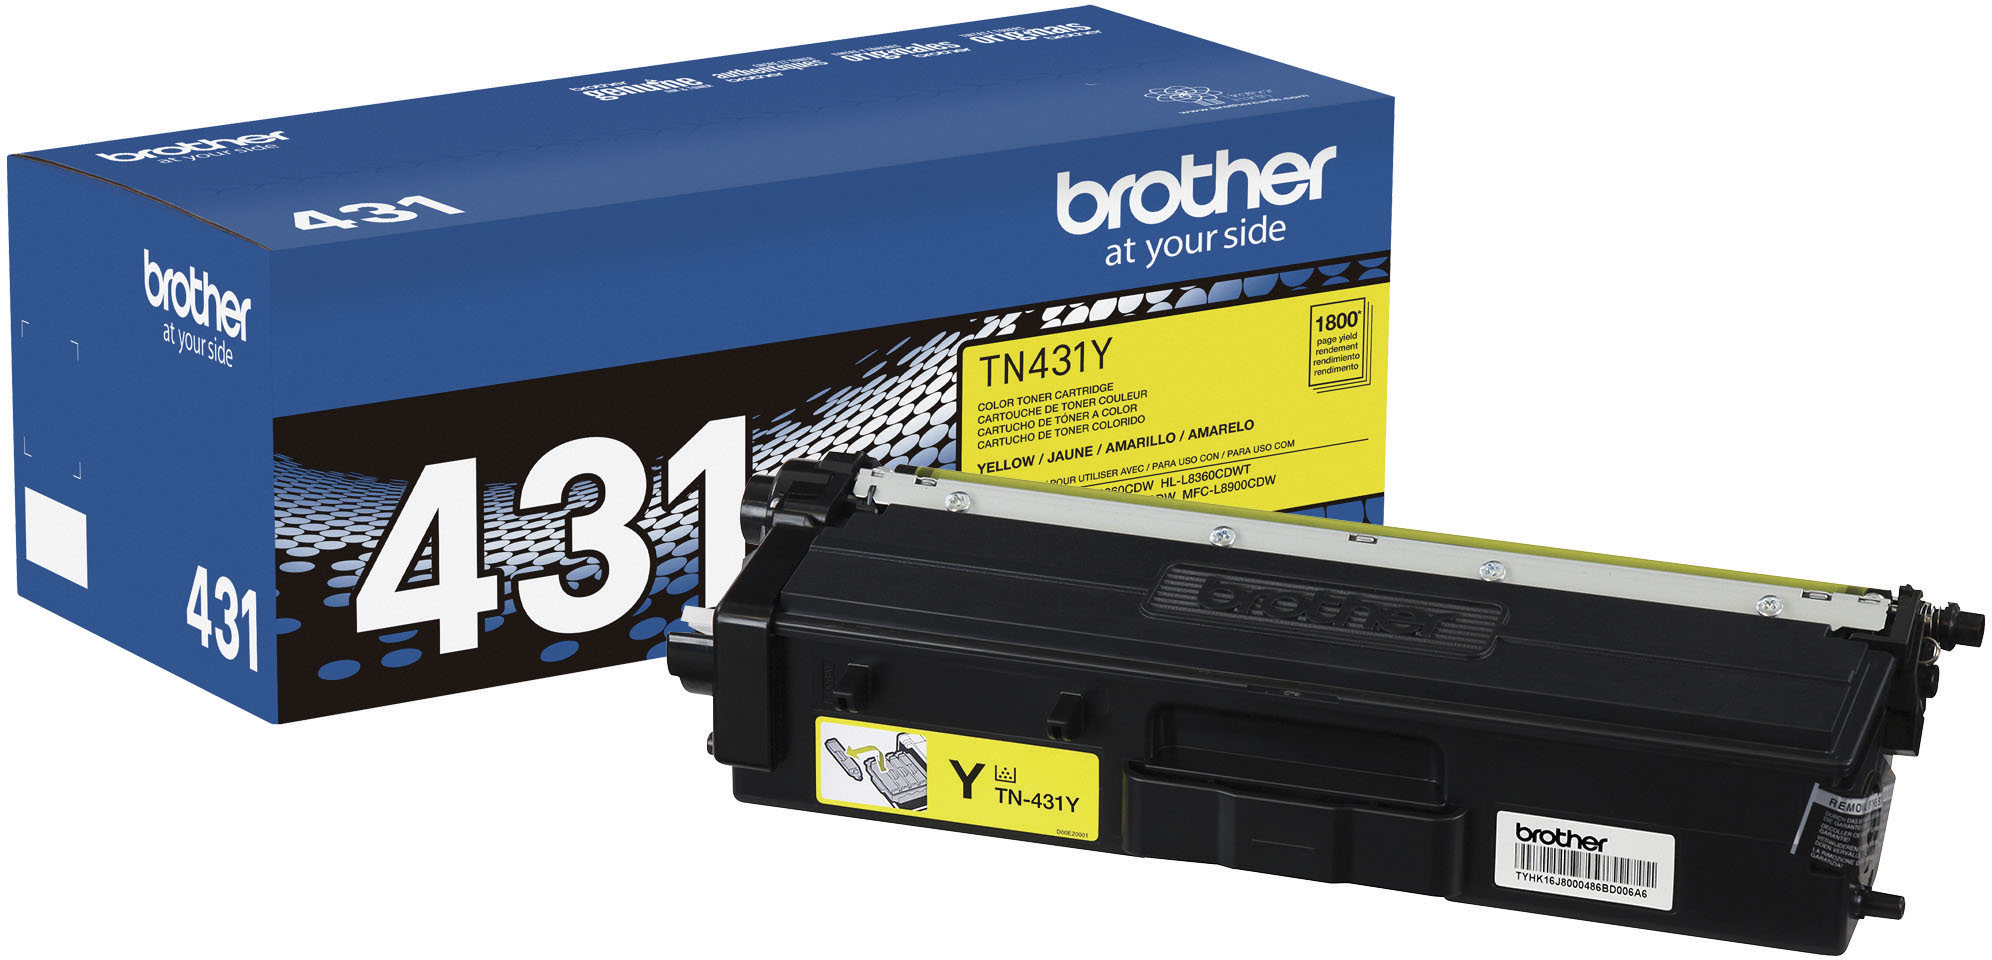 Brother TN431Y Standard-Yield Toner Cartridge Yellow TN431Y Best Buy